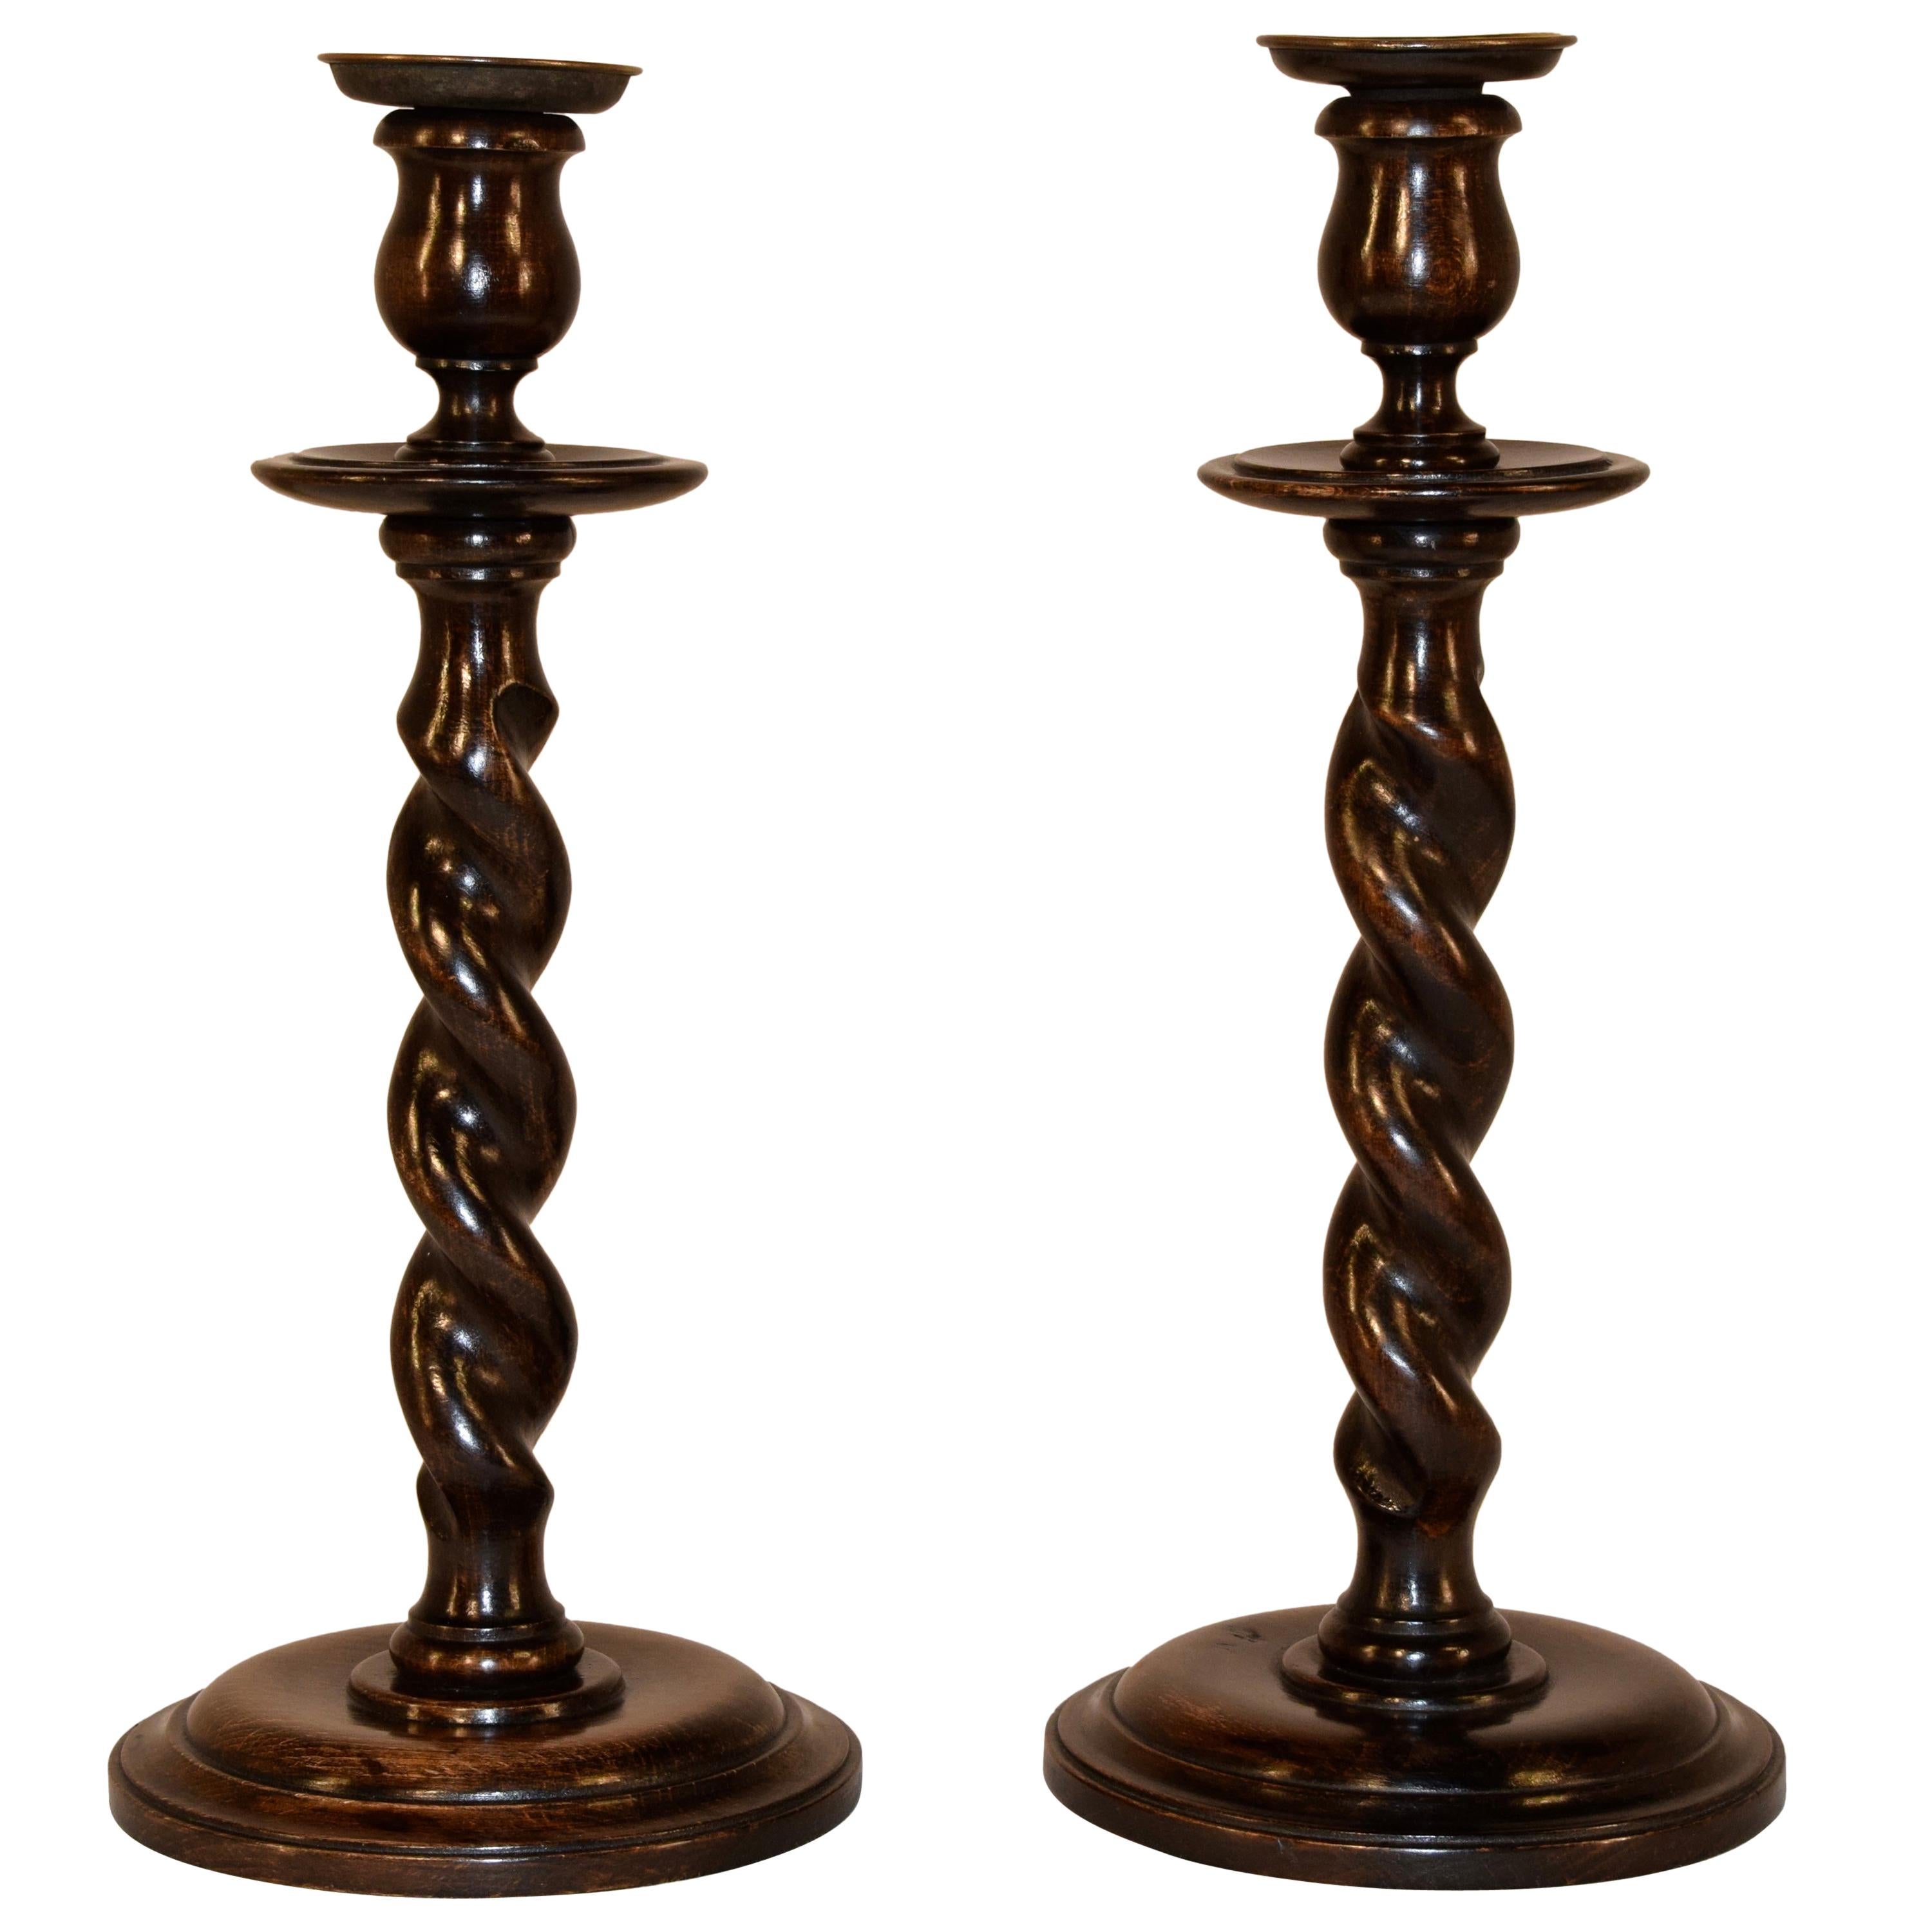 Pair of 19th Century English Candlesticks